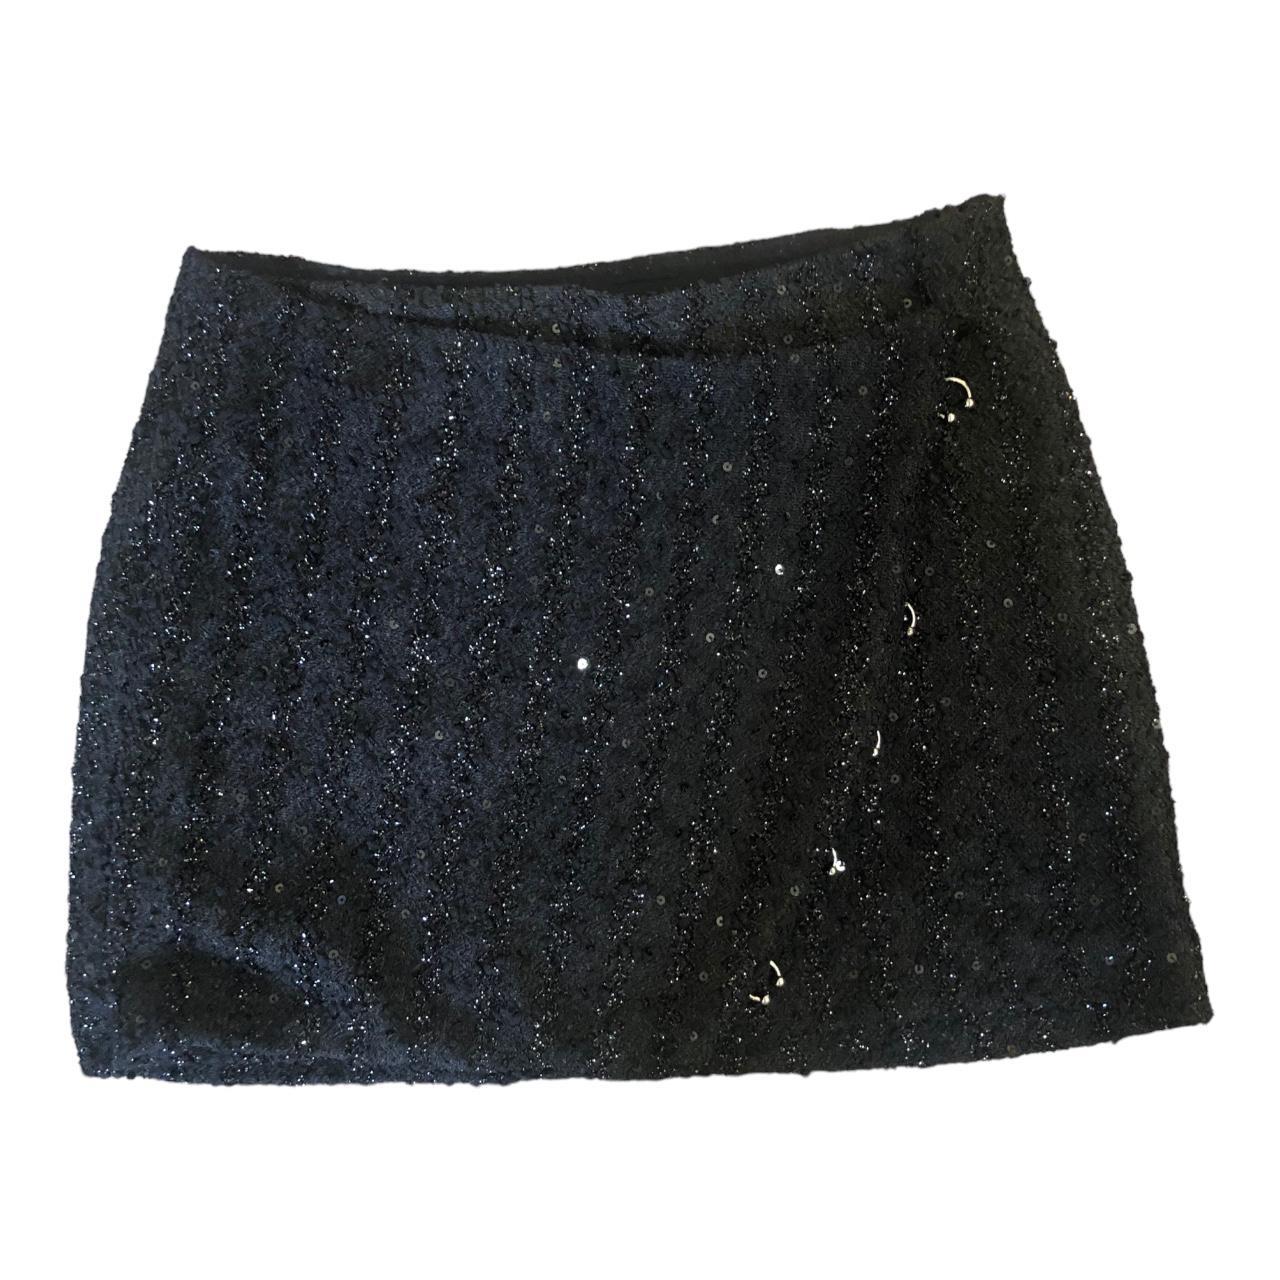 Zara Mini Skirt with diagonal silver rings sparkling... - Depop